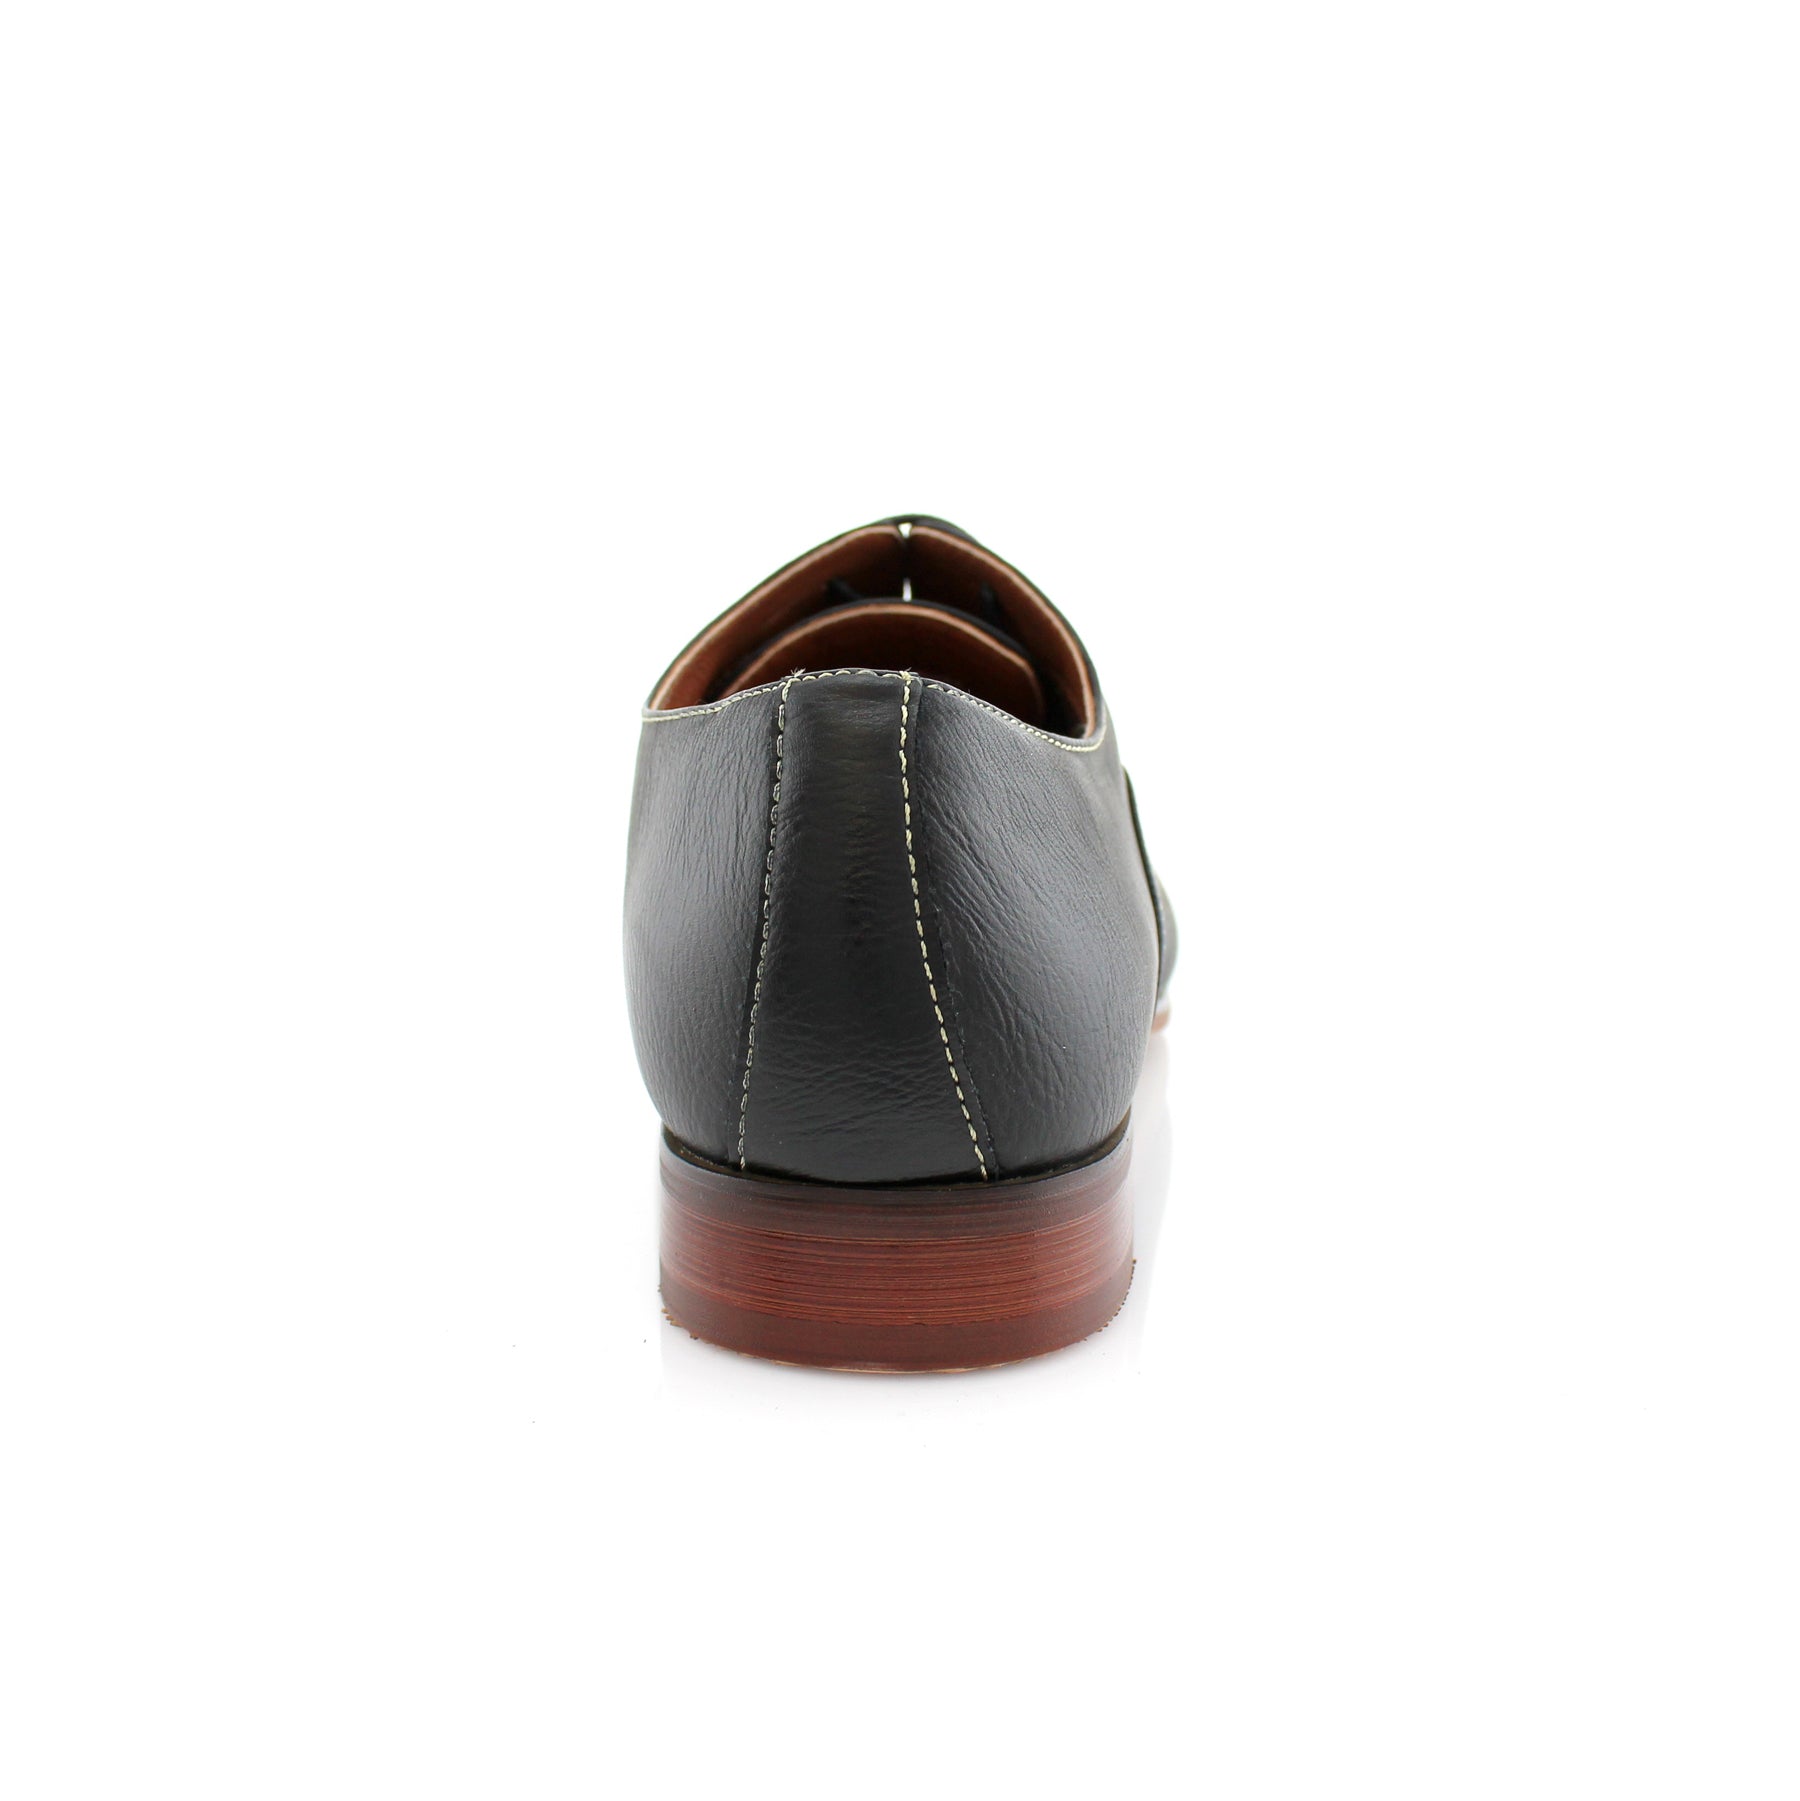 Minimalist Classic Oxfords | ABEL by Ferro Aldo | Conal Footwear | Back Angle View